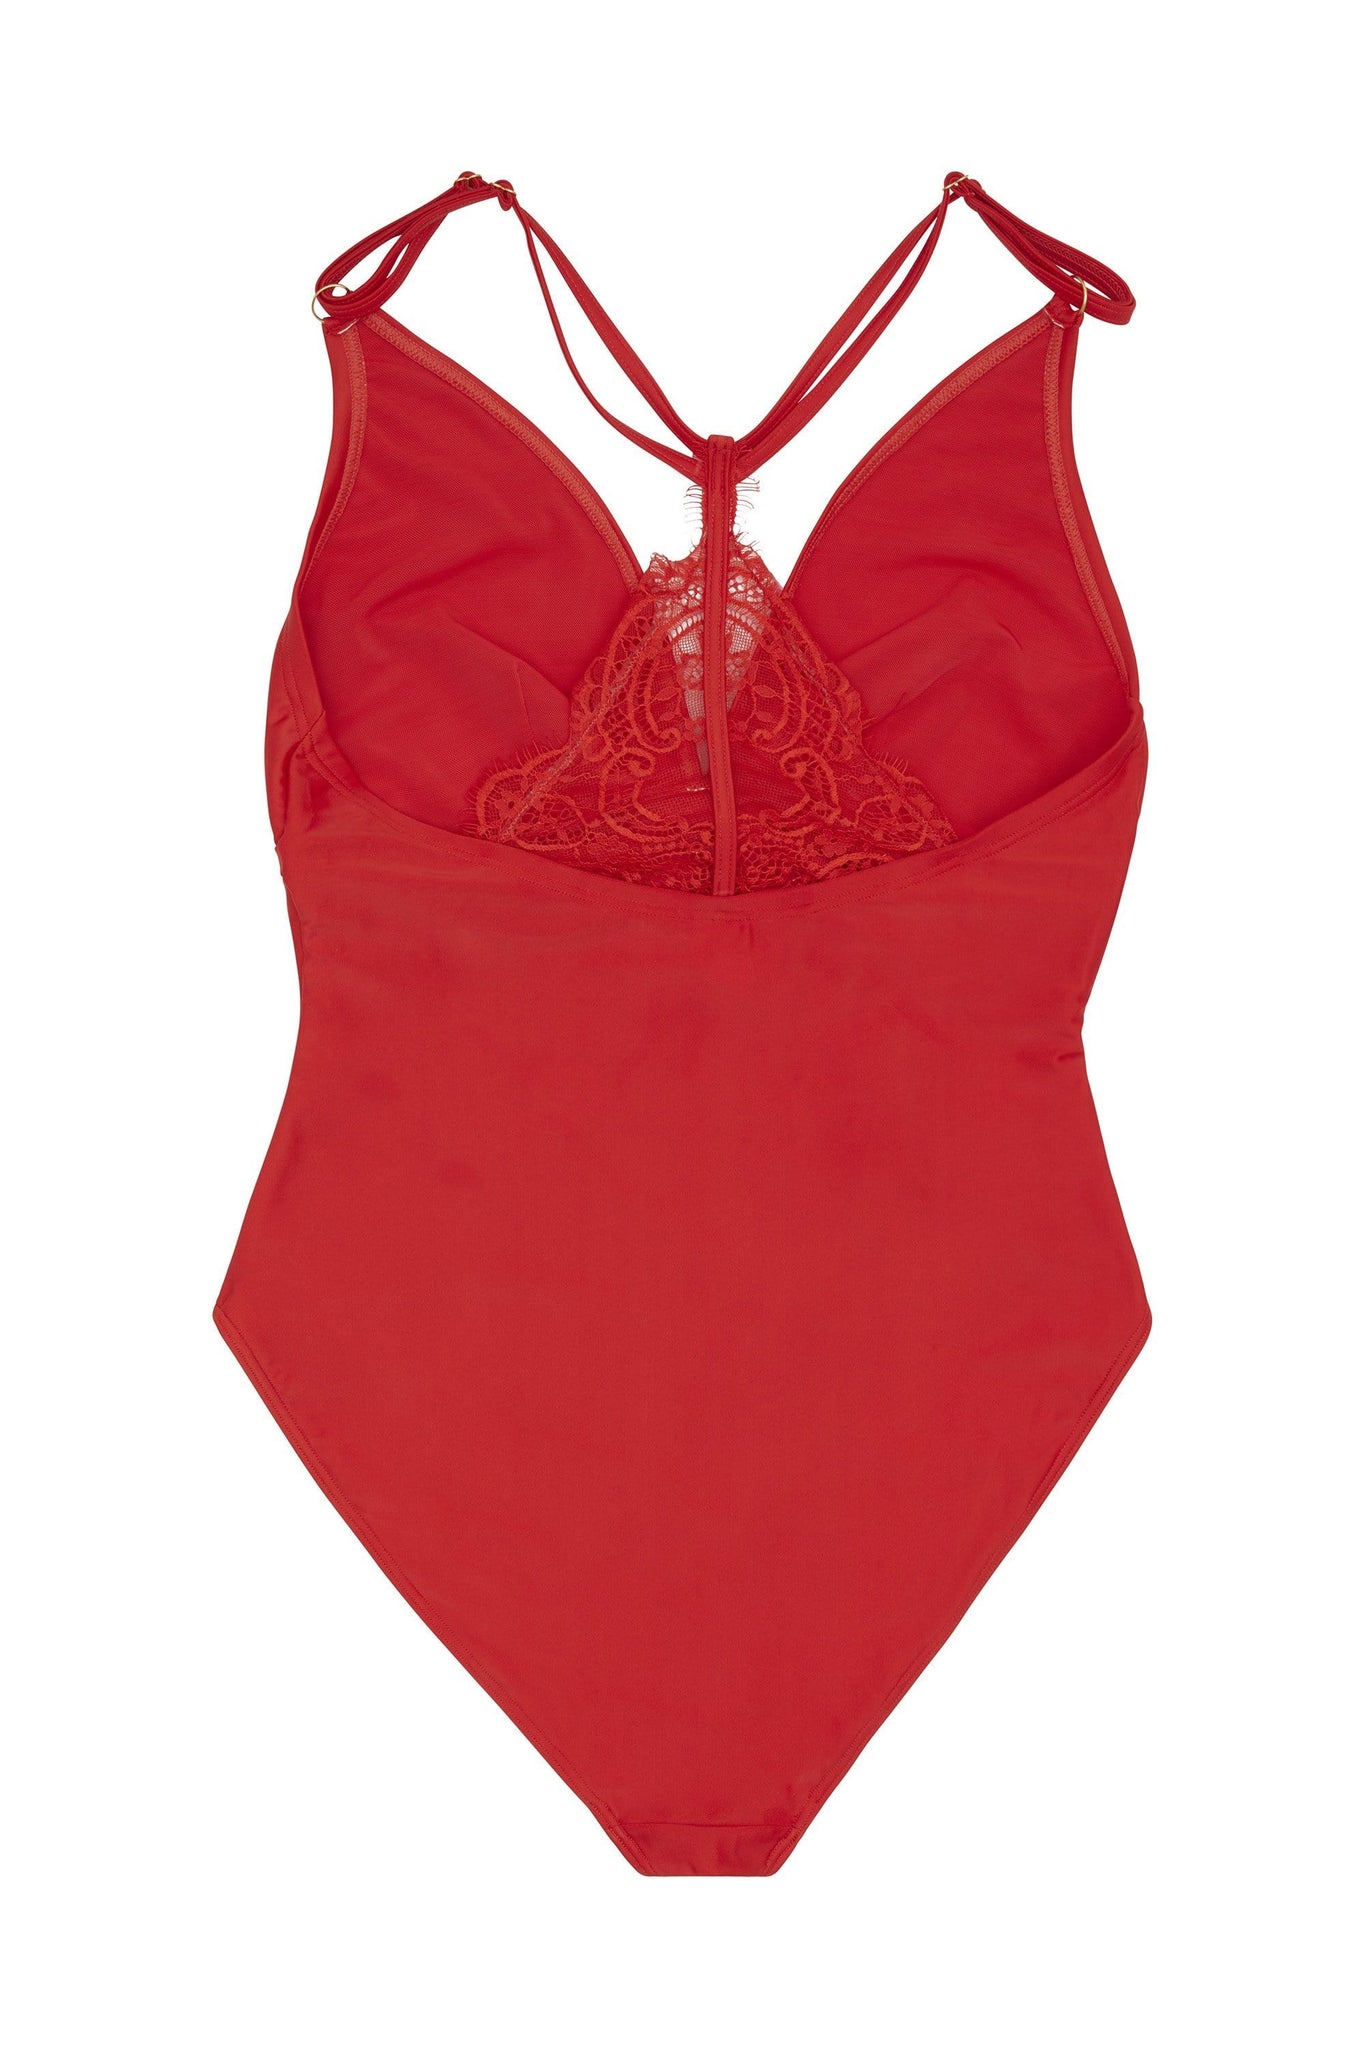 Hunter McGrady Plus Size/Curve Red Lace Detail Swimsuit - Playful ...